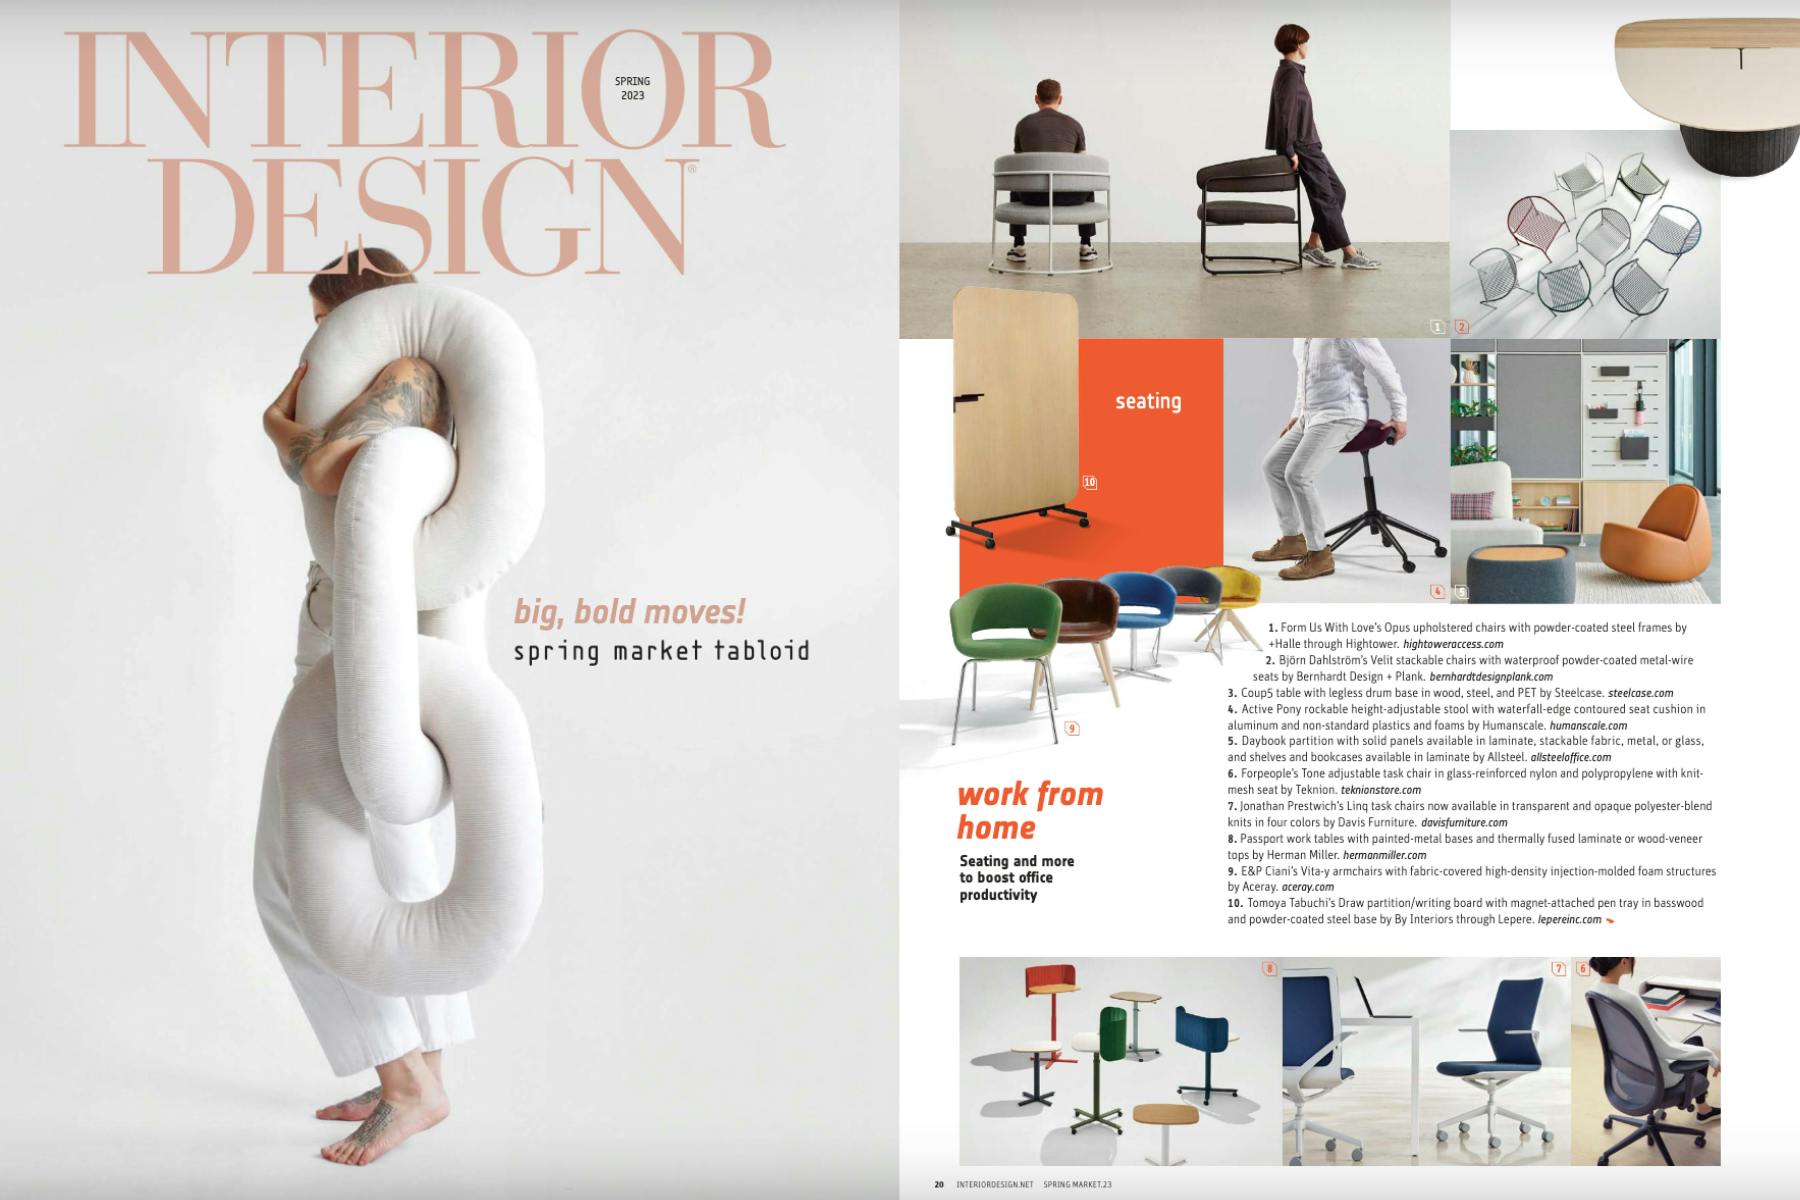 Opus featured in Interior Design's Spring Market Tabloid